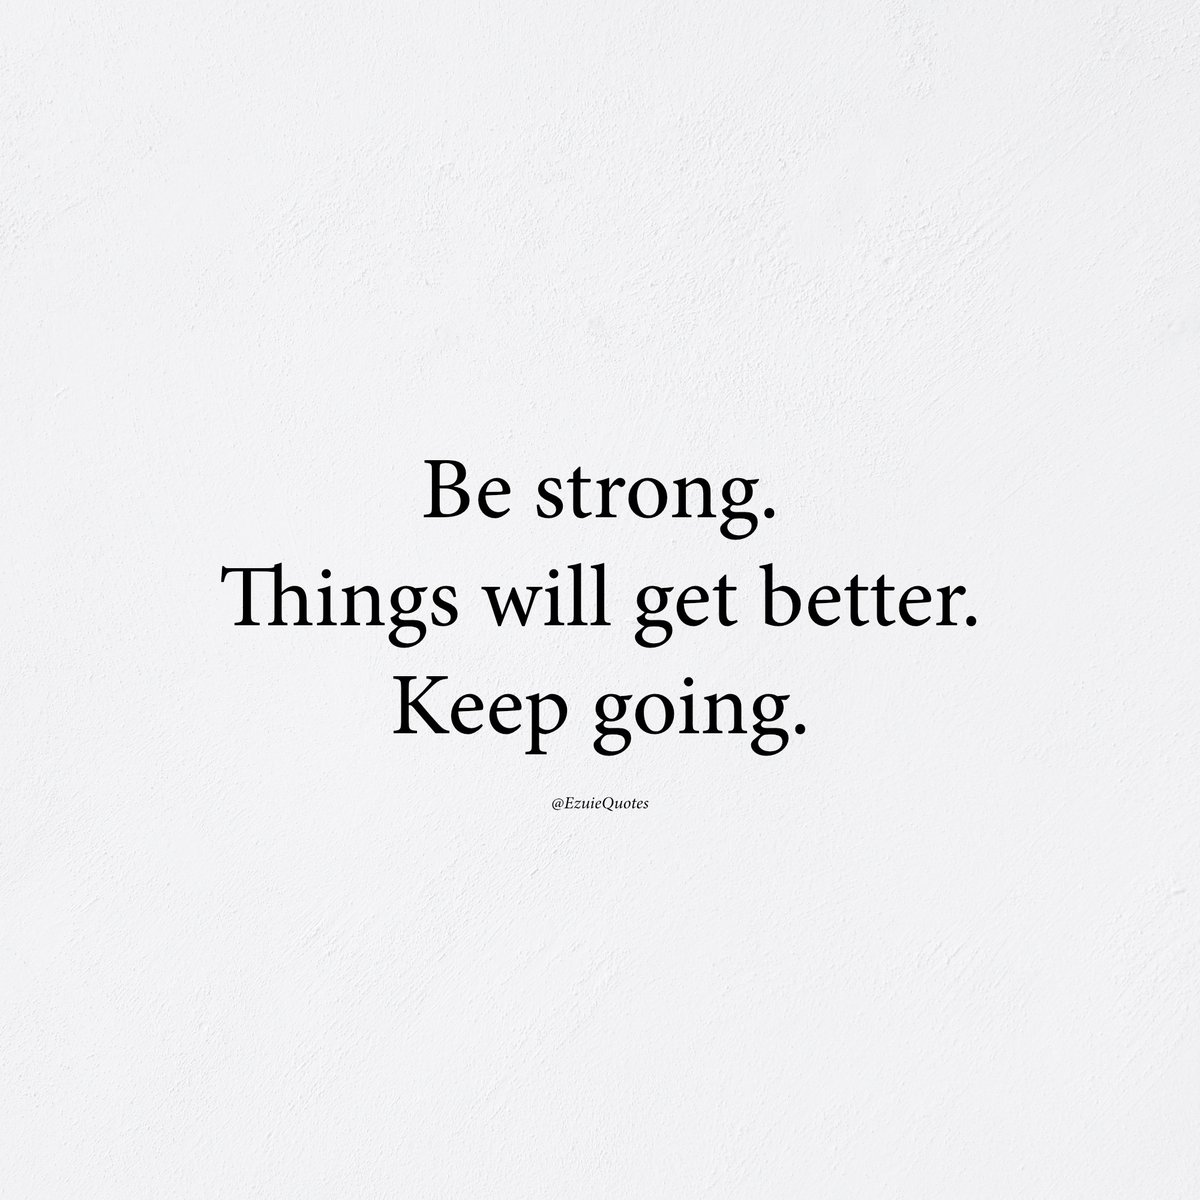 Keep going